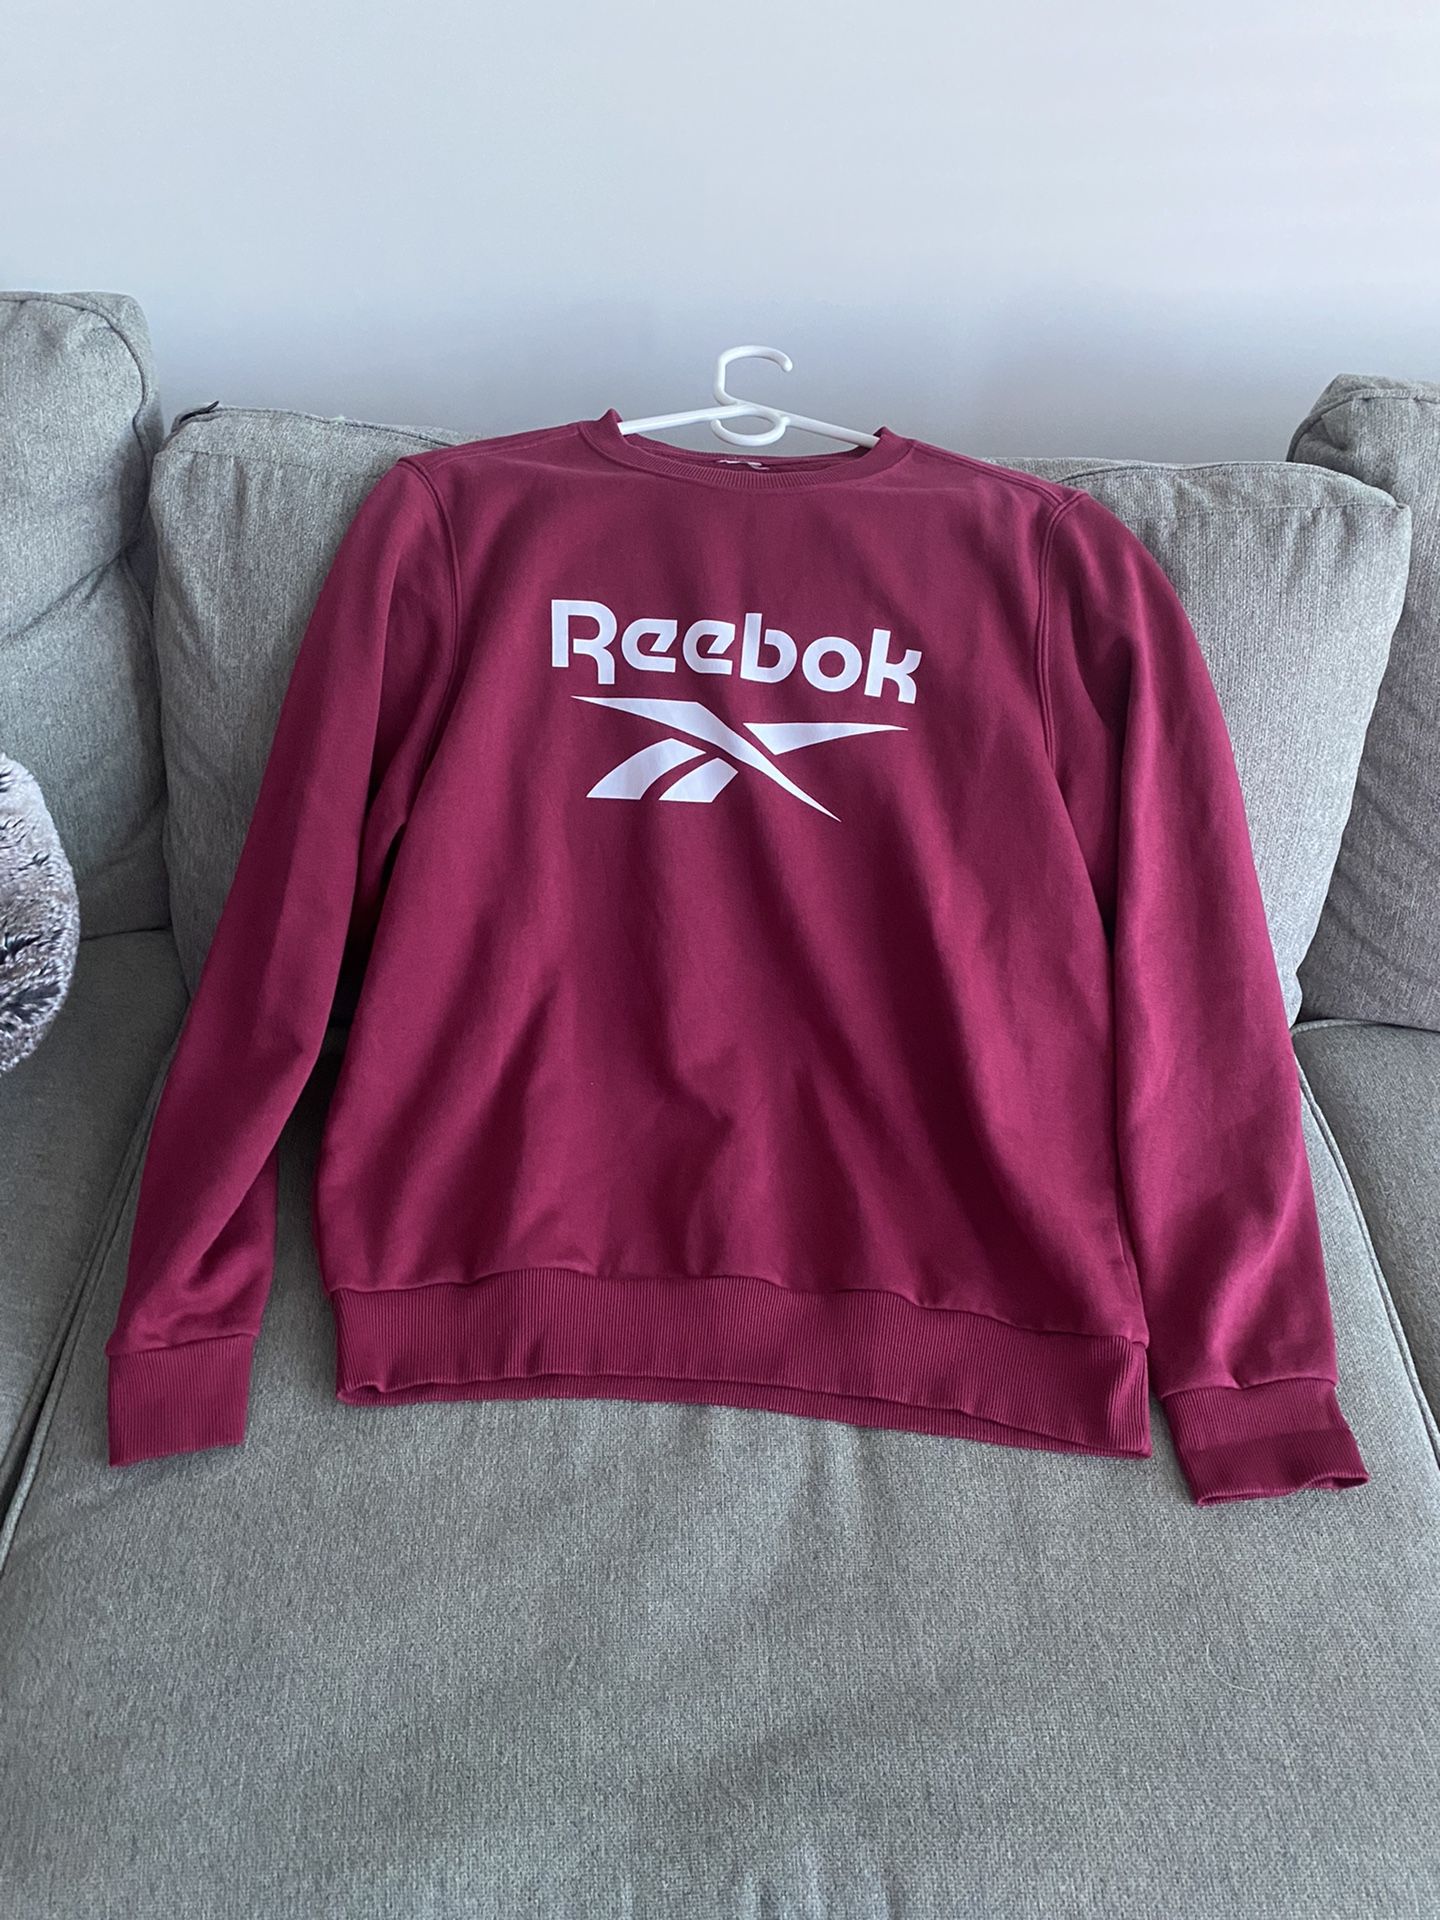 Reebok Crewneck Sweater